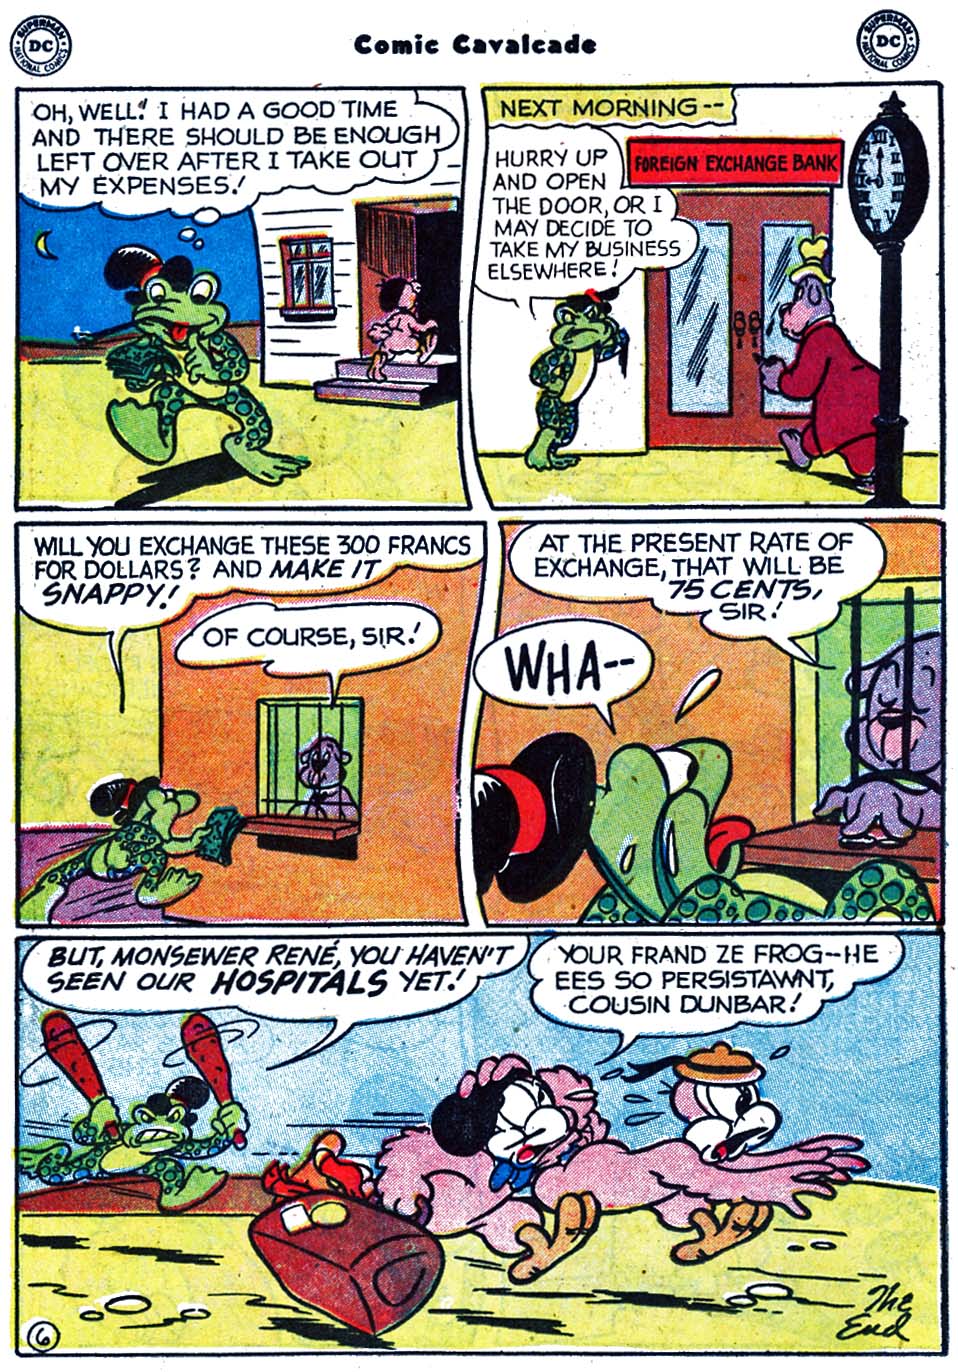 Comic Cavalcade issue 51 - Page 34